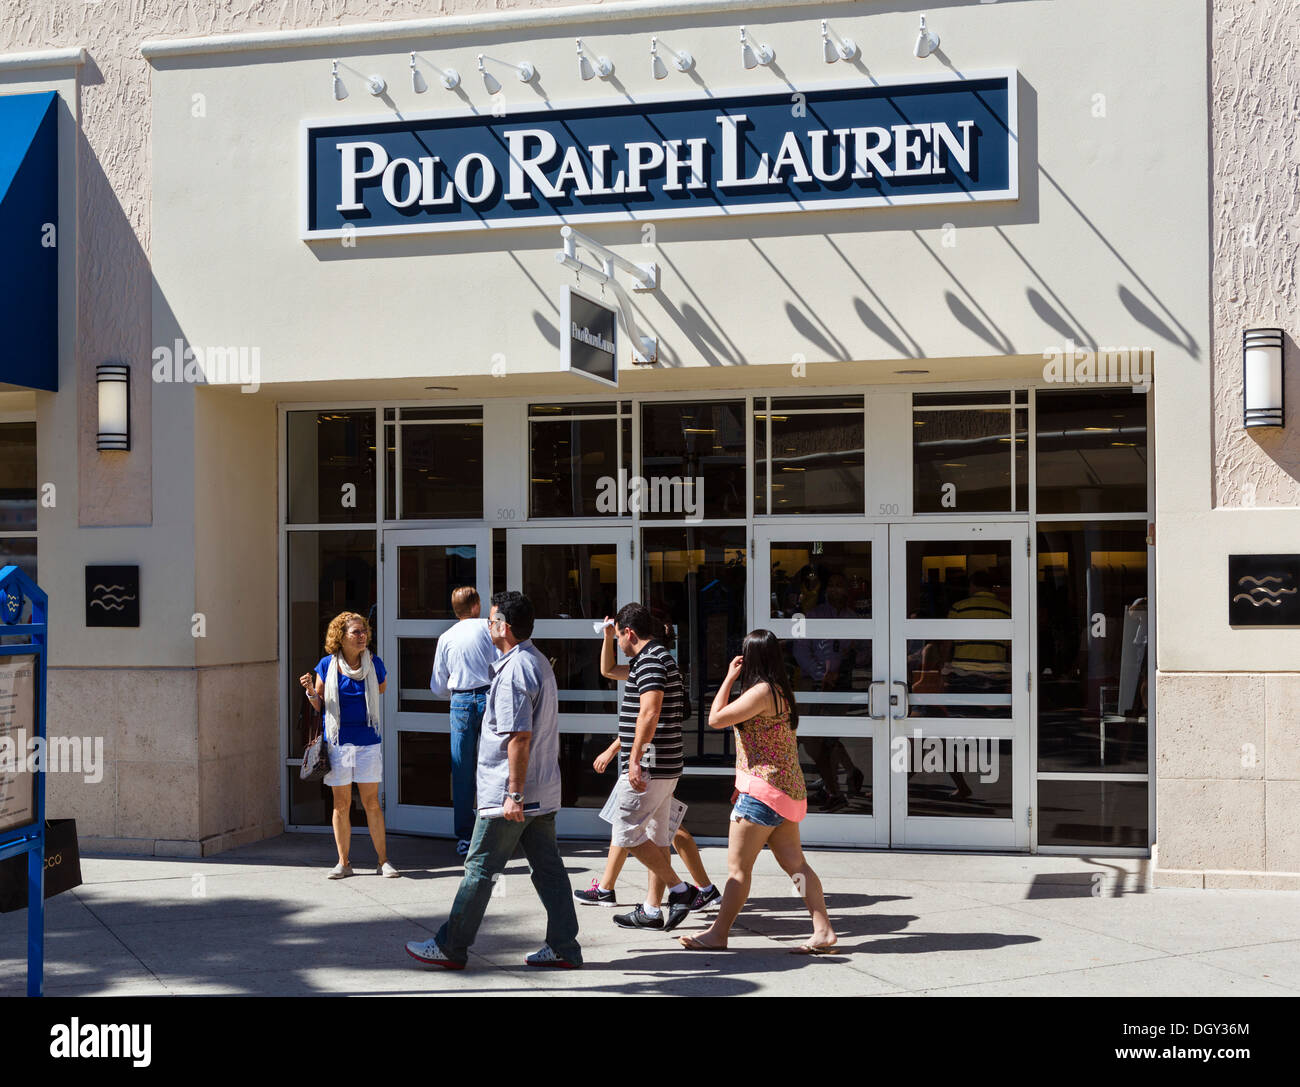 Polo ralph lauren outlet store -Fotos und -Bildmaterial in hoher Auflösung  – Alamy